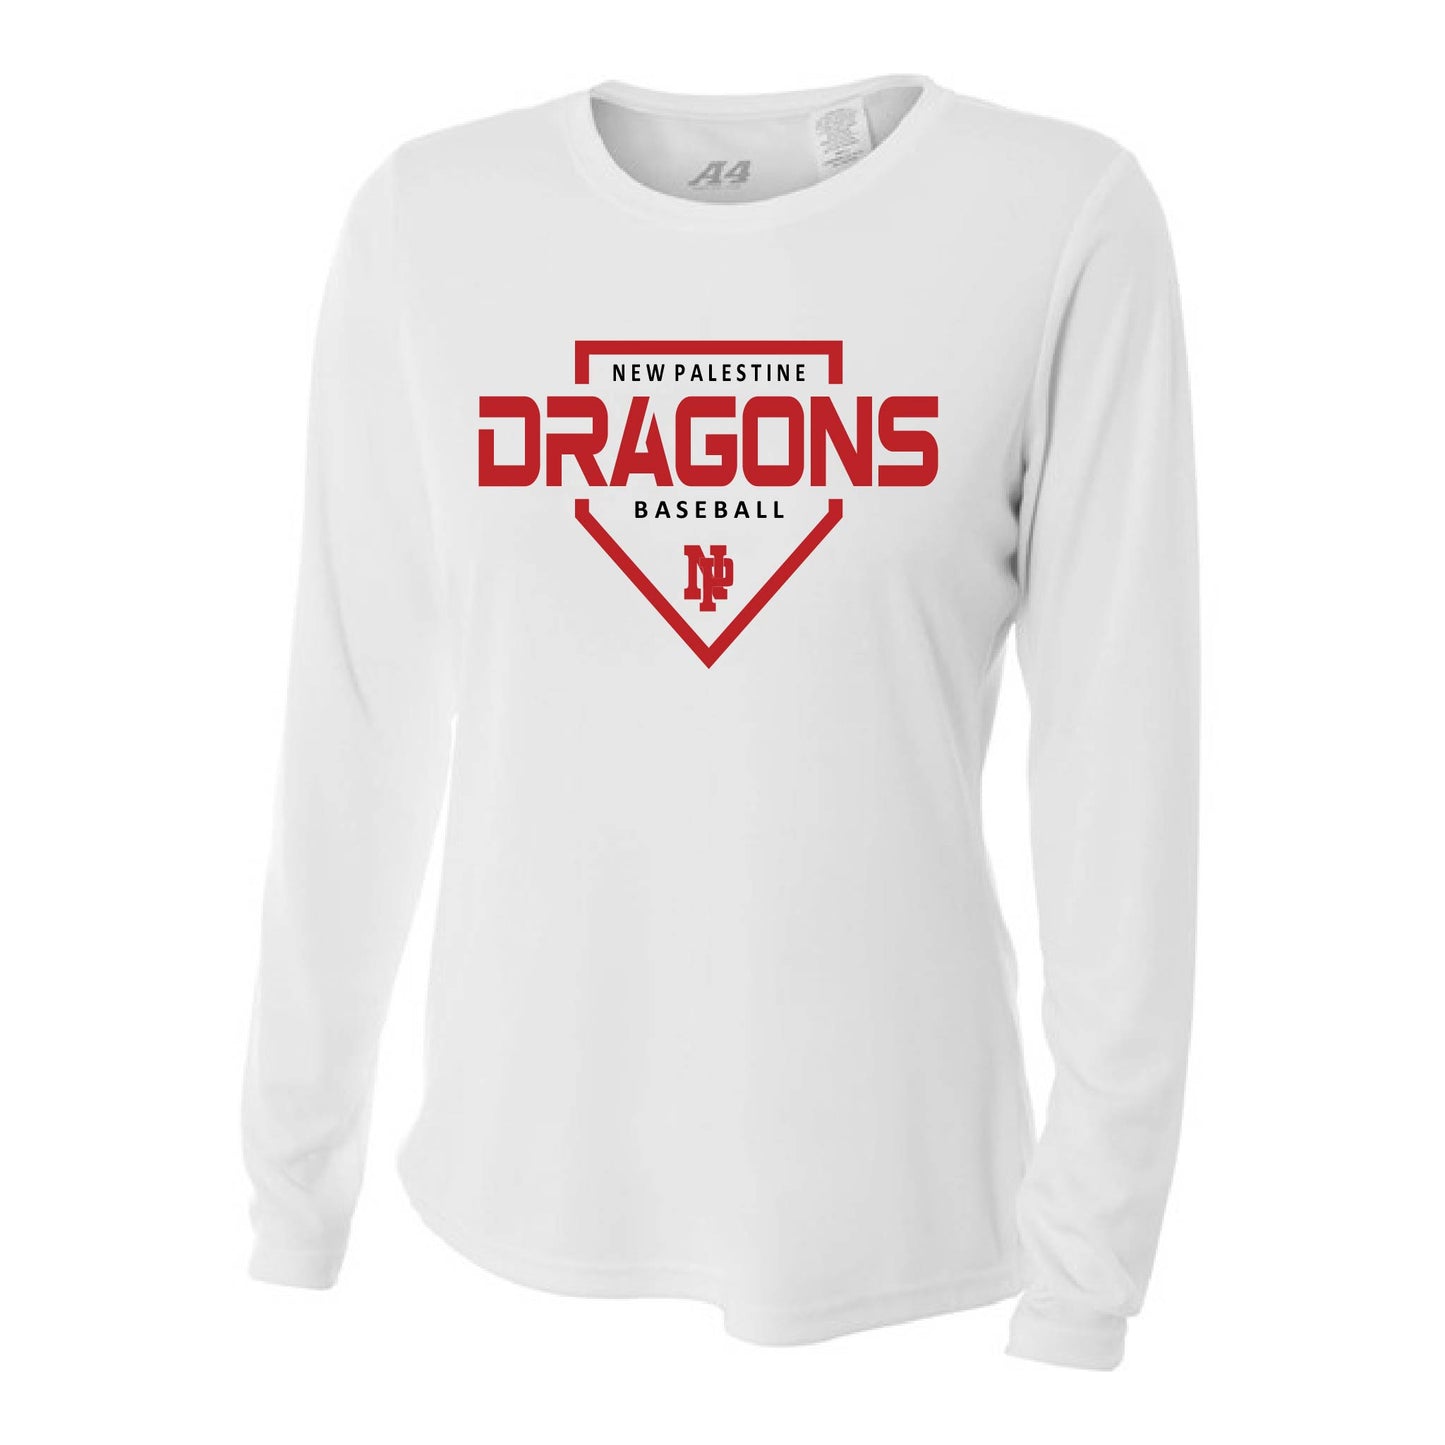 Womens L/S T-Shirt - DRAGONS Baseball